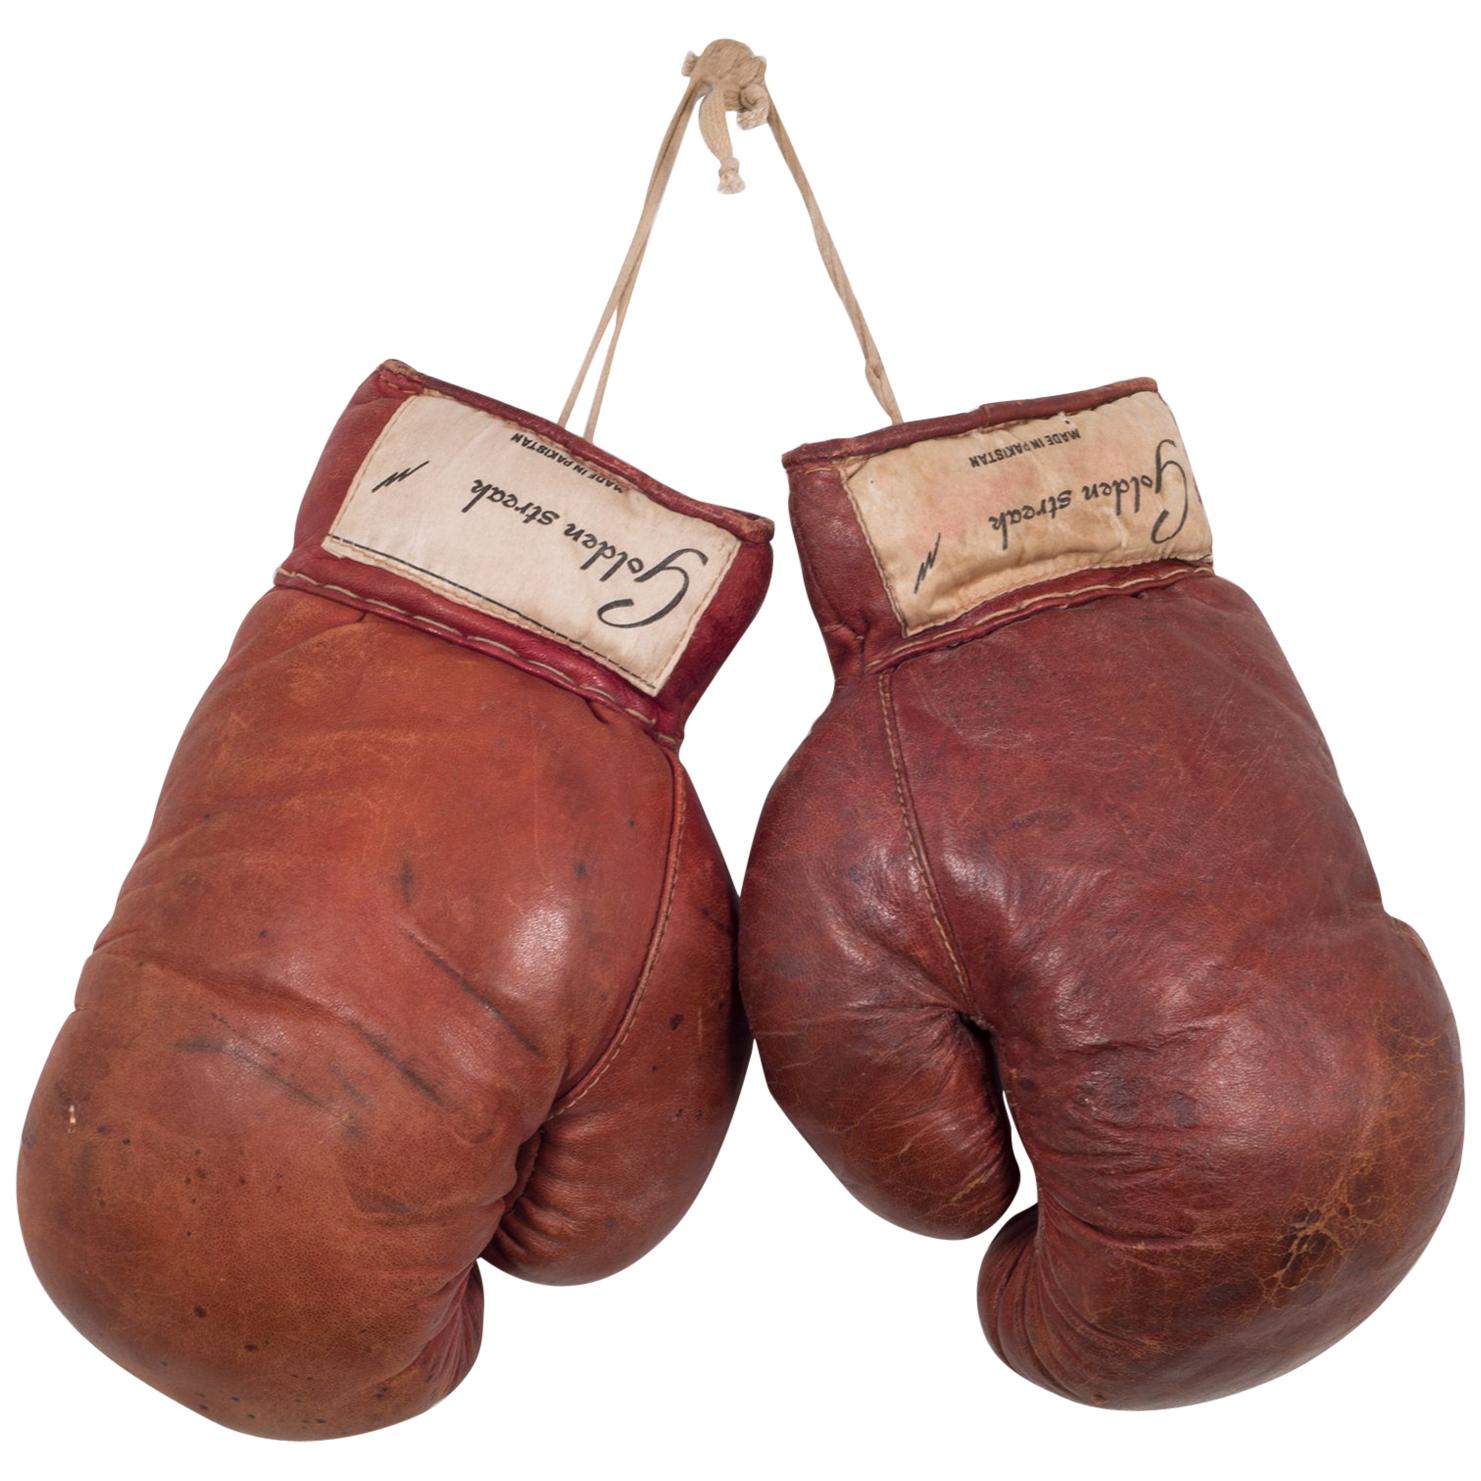 Vintage Leather "Golden Streak" Boxing Gloves, circa 1940s